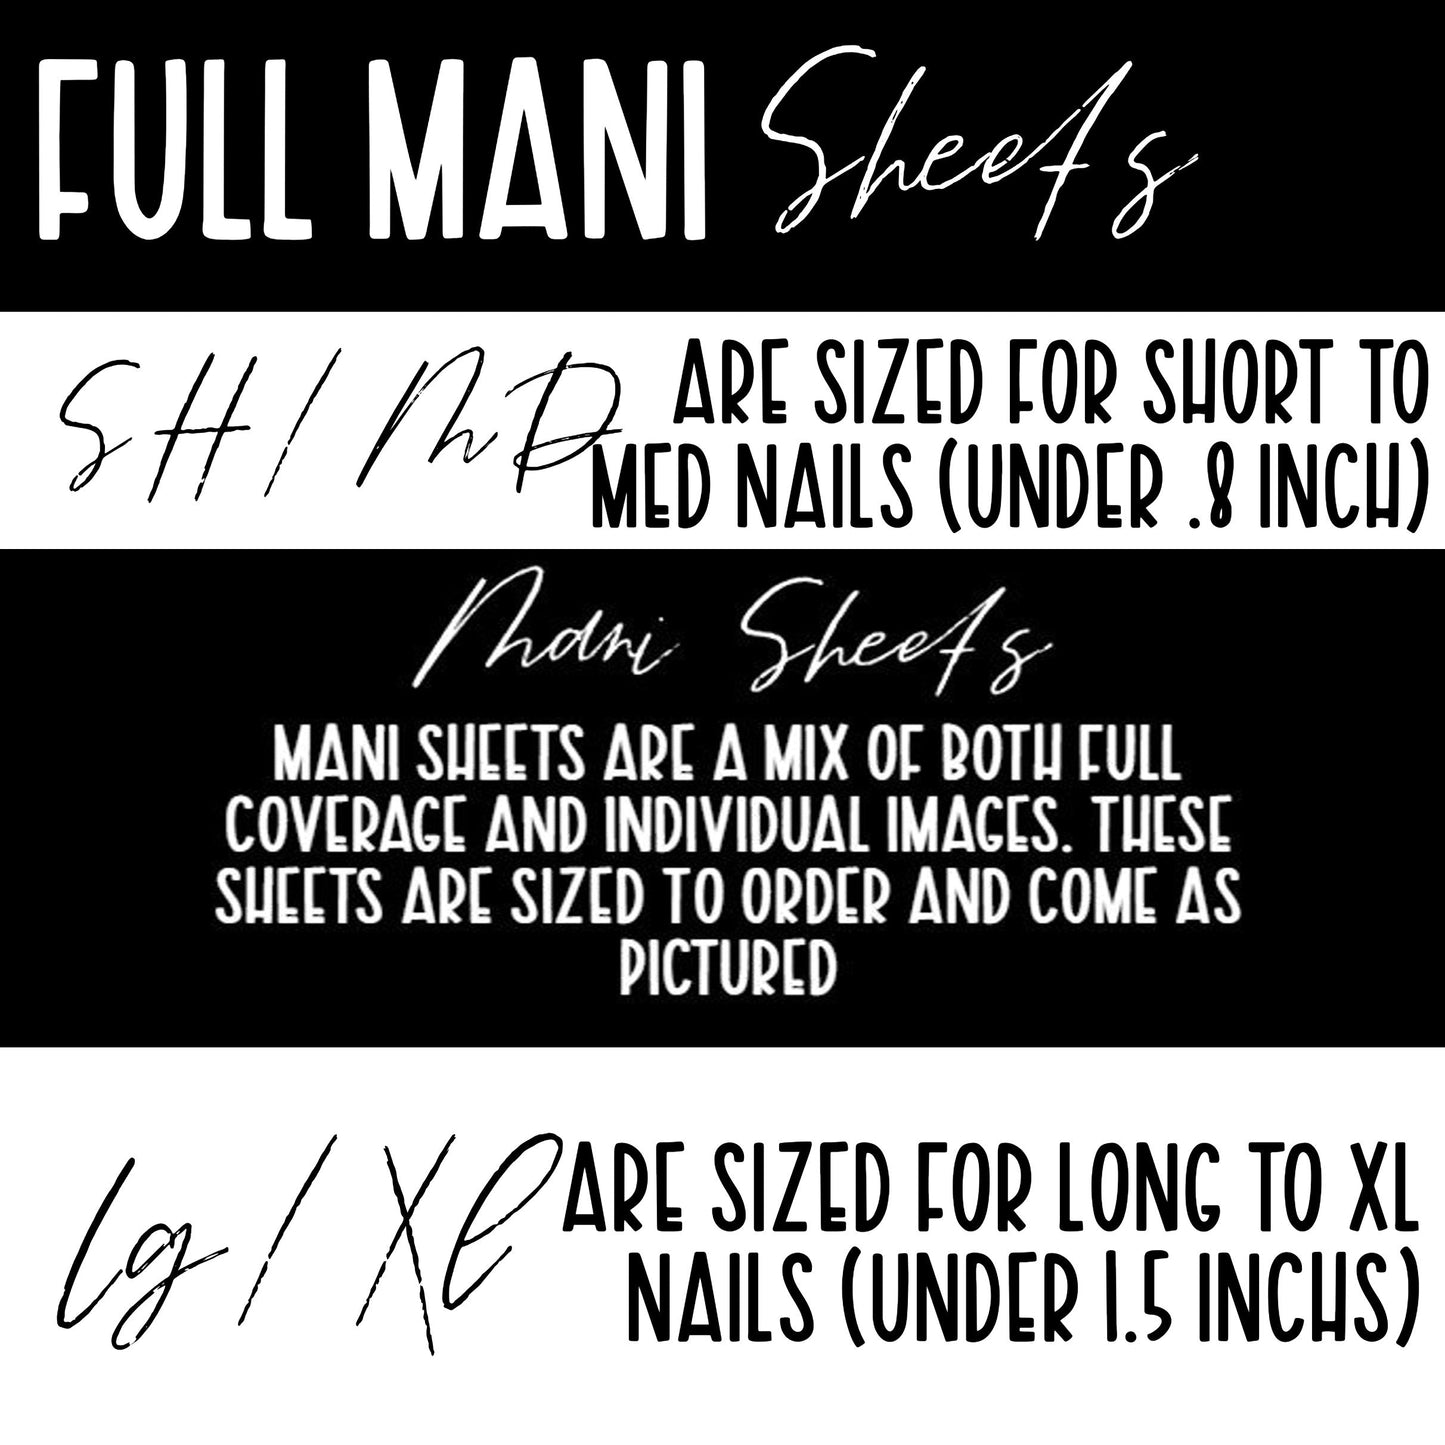 I carrot-lot about you - Nail Art Mani Sheet